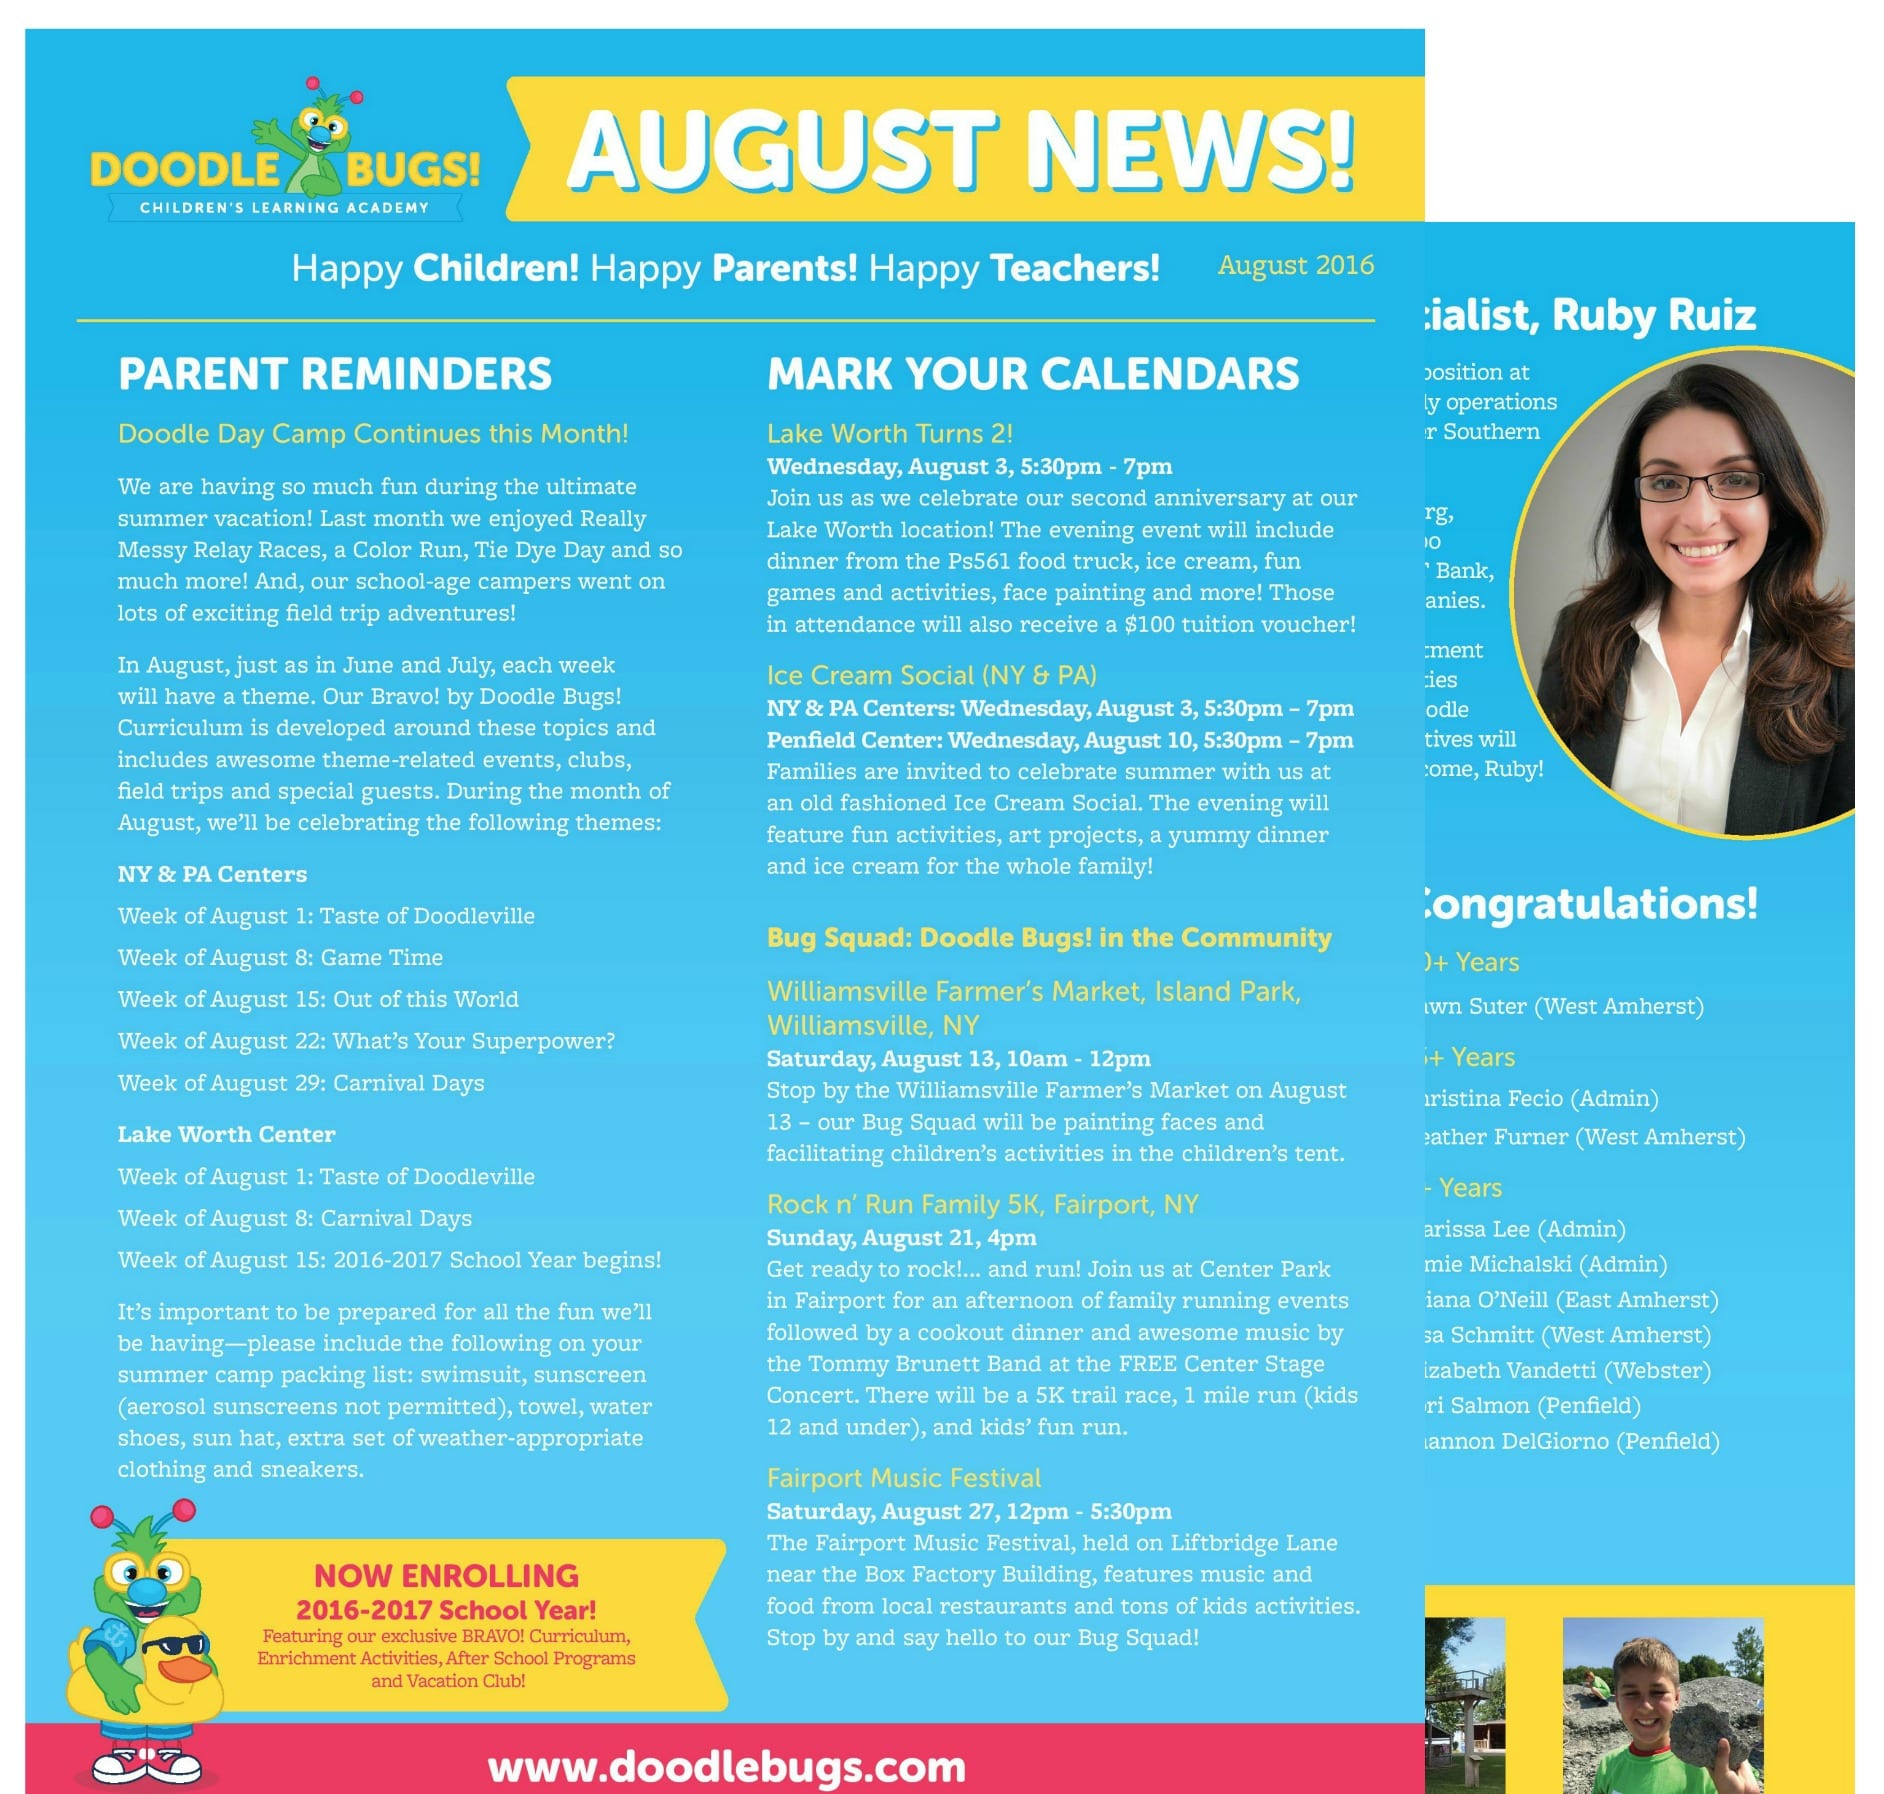 August newsletter